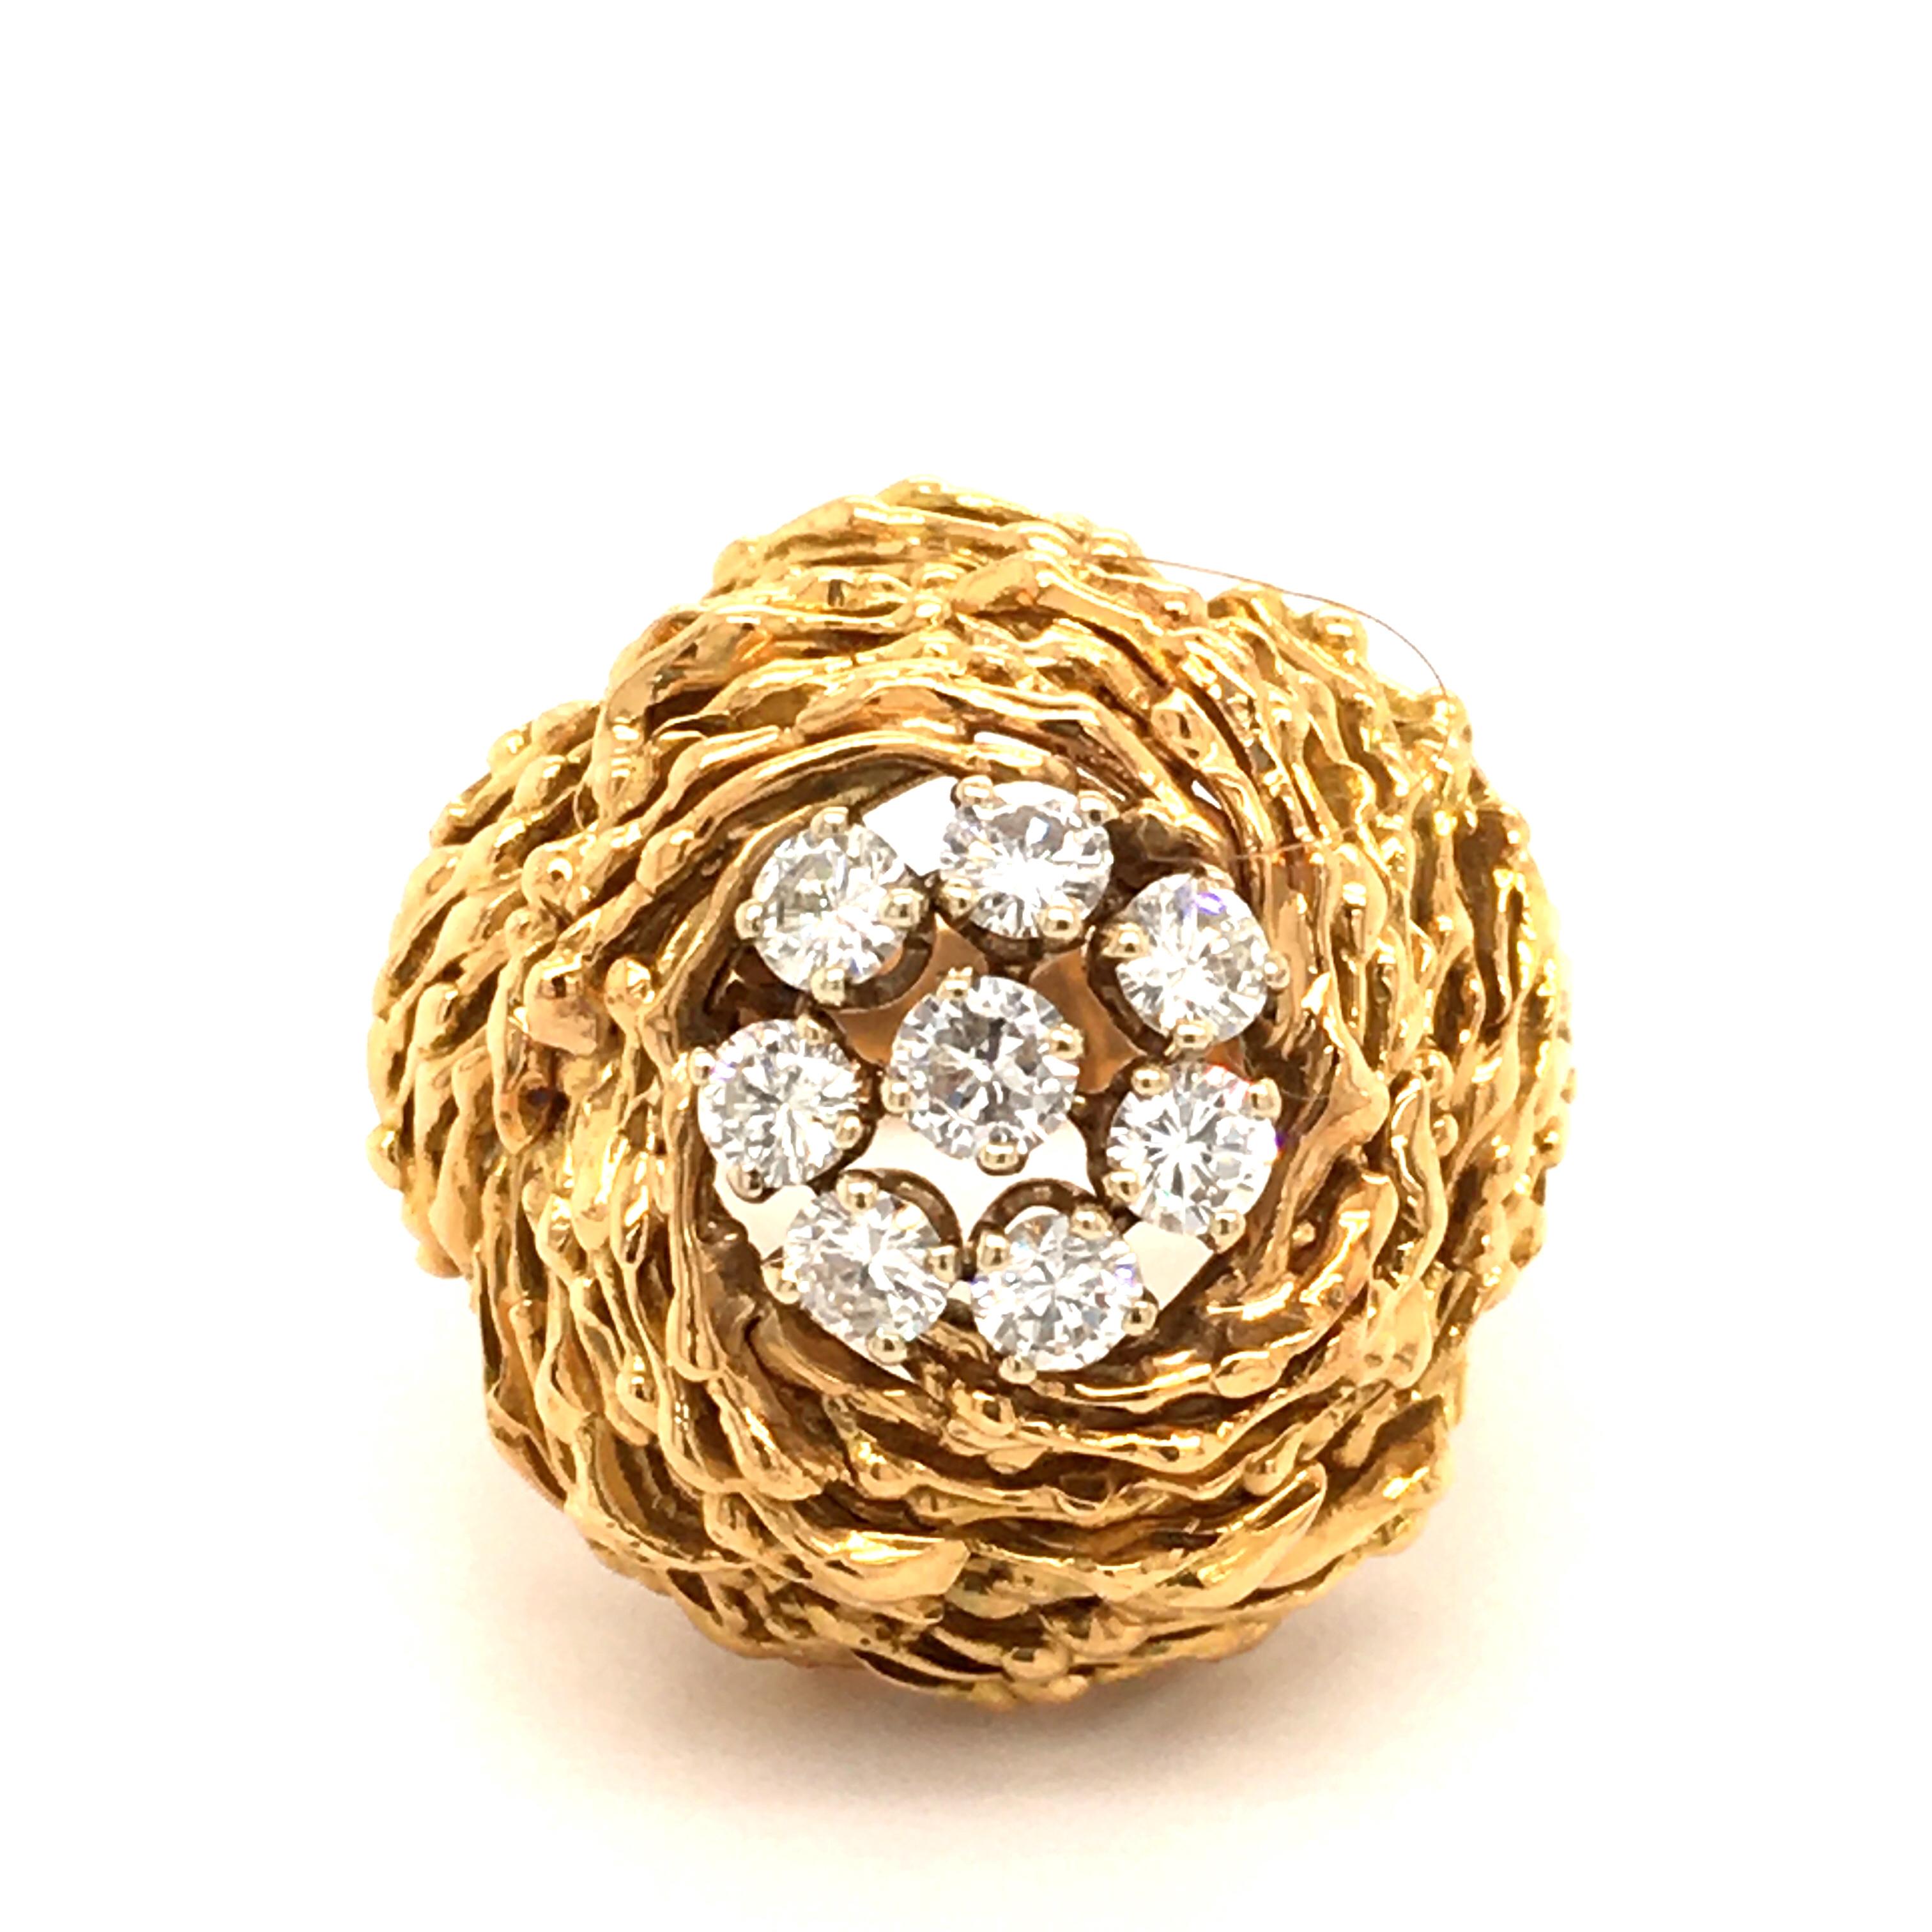 Retro Gubelin Diamond Ring in 18 Karat Yellow and White Gold